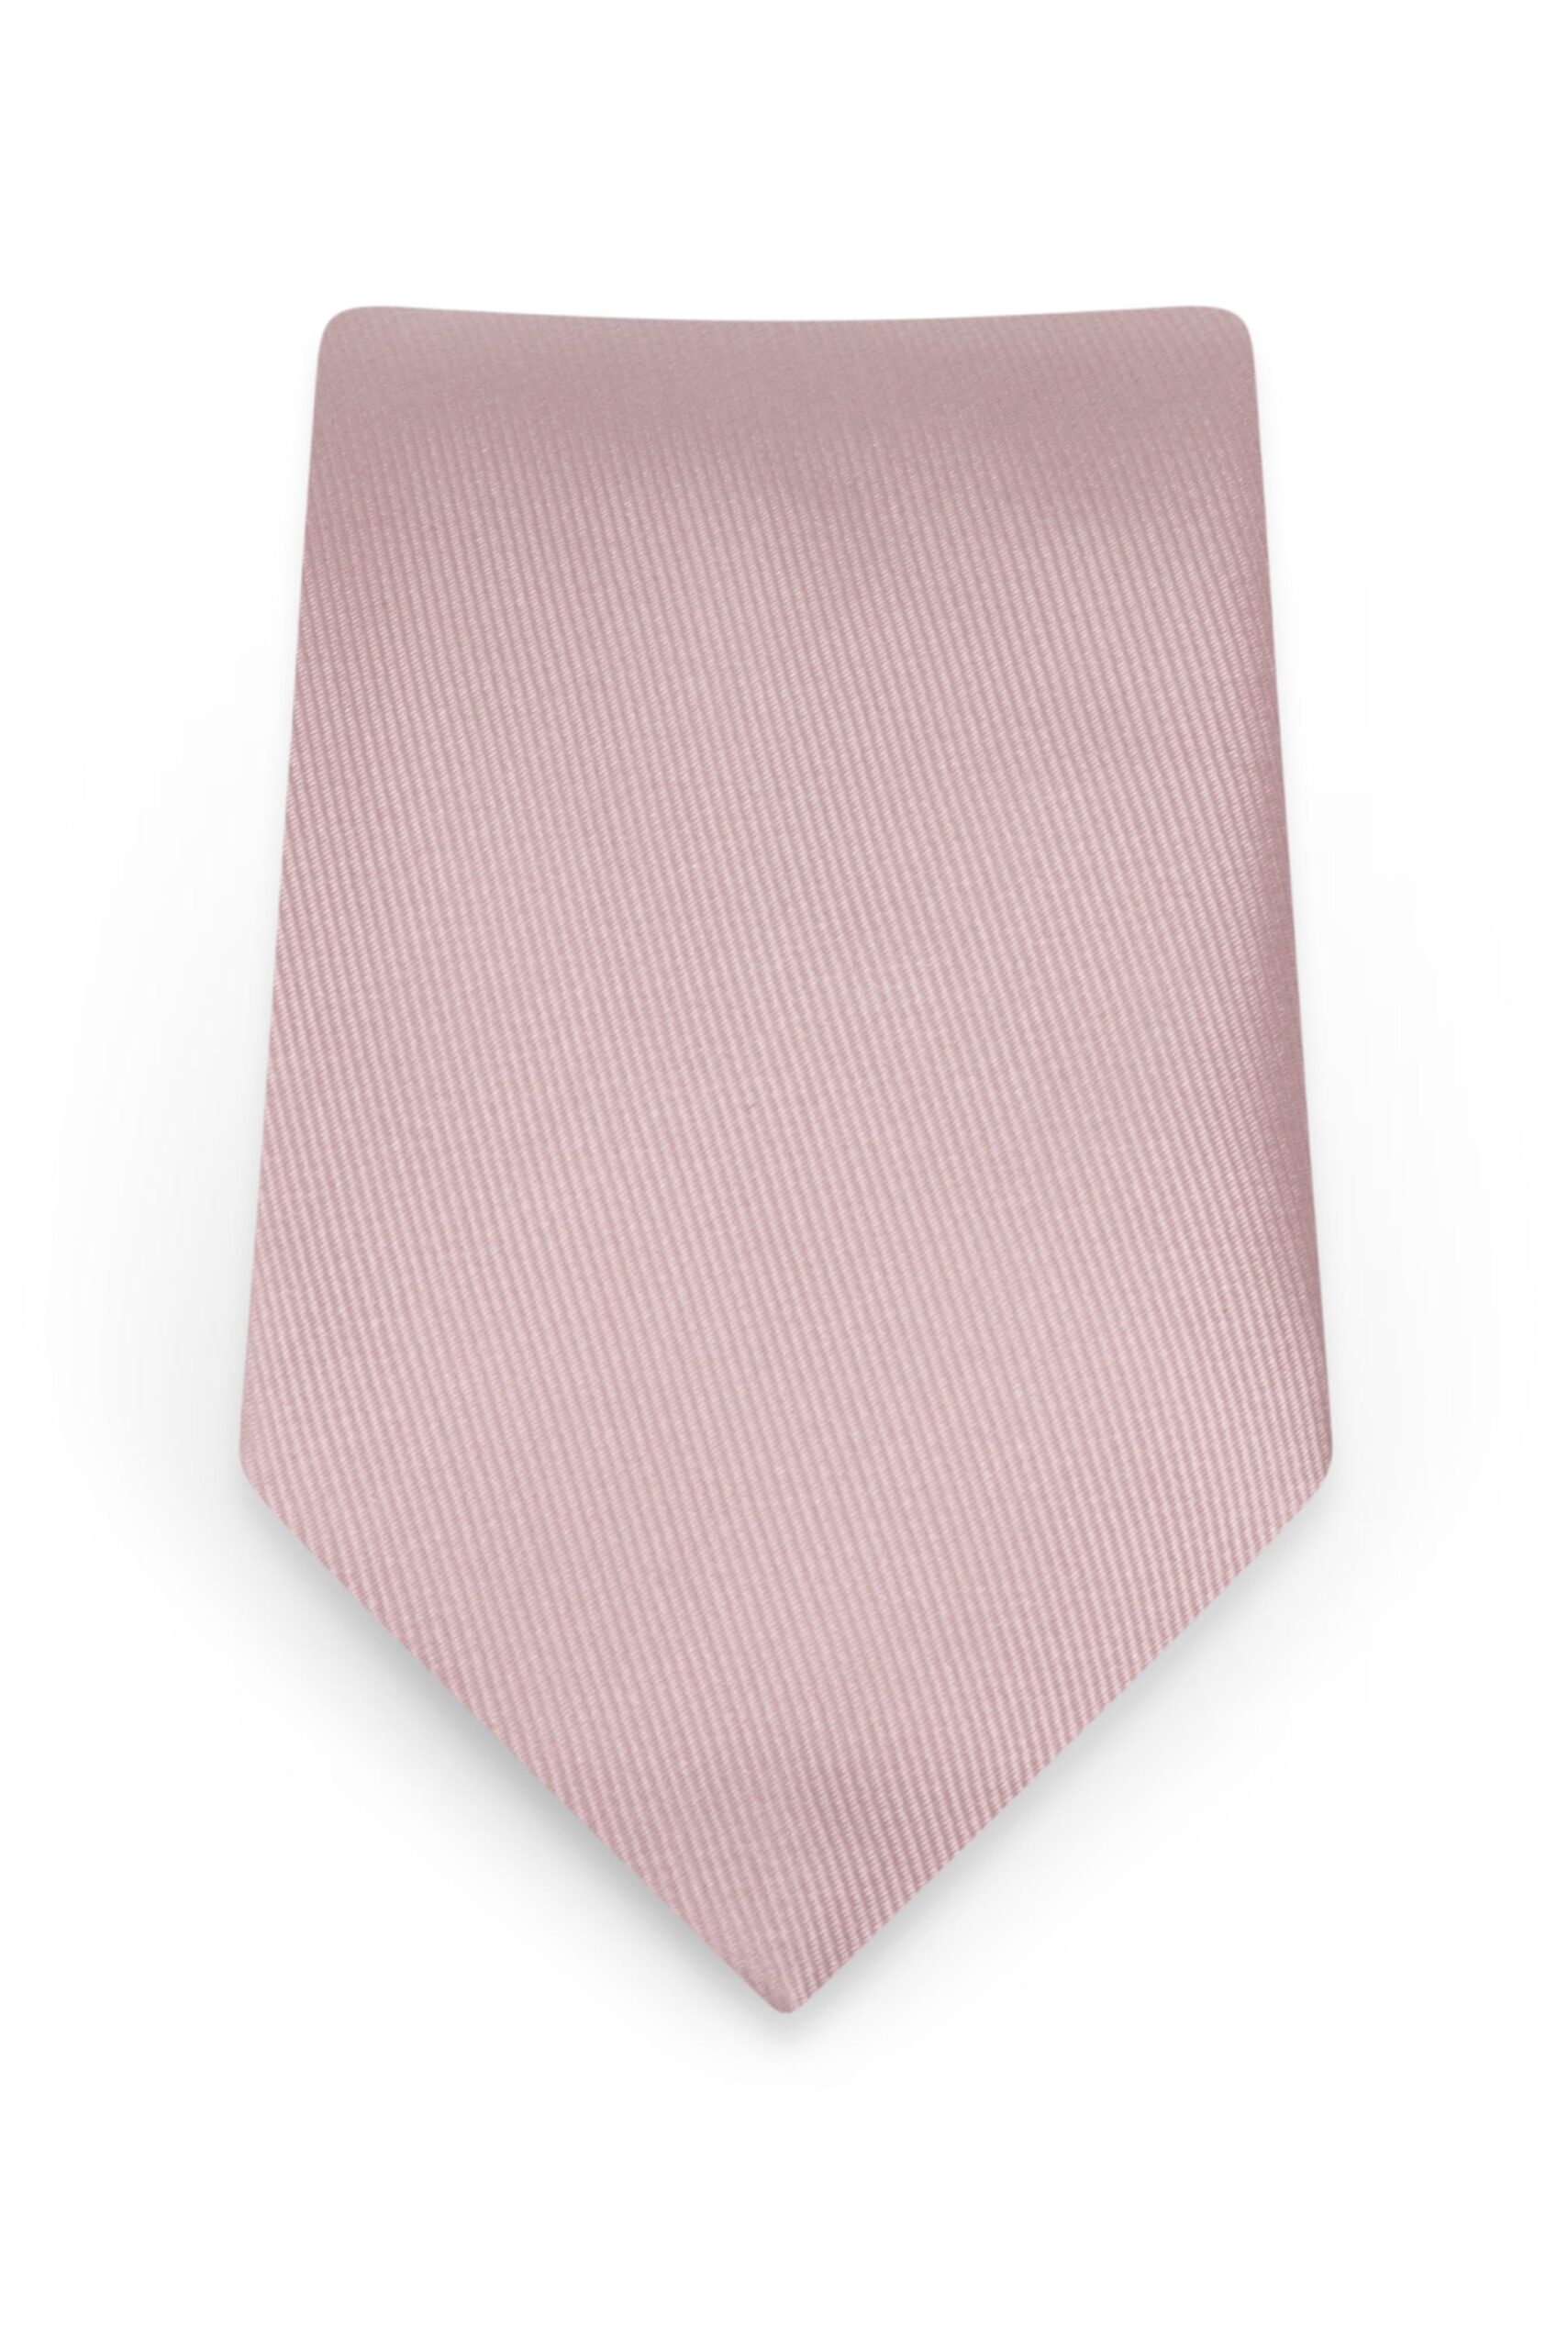 Solid First Blush Self-Tie Windsor Tie